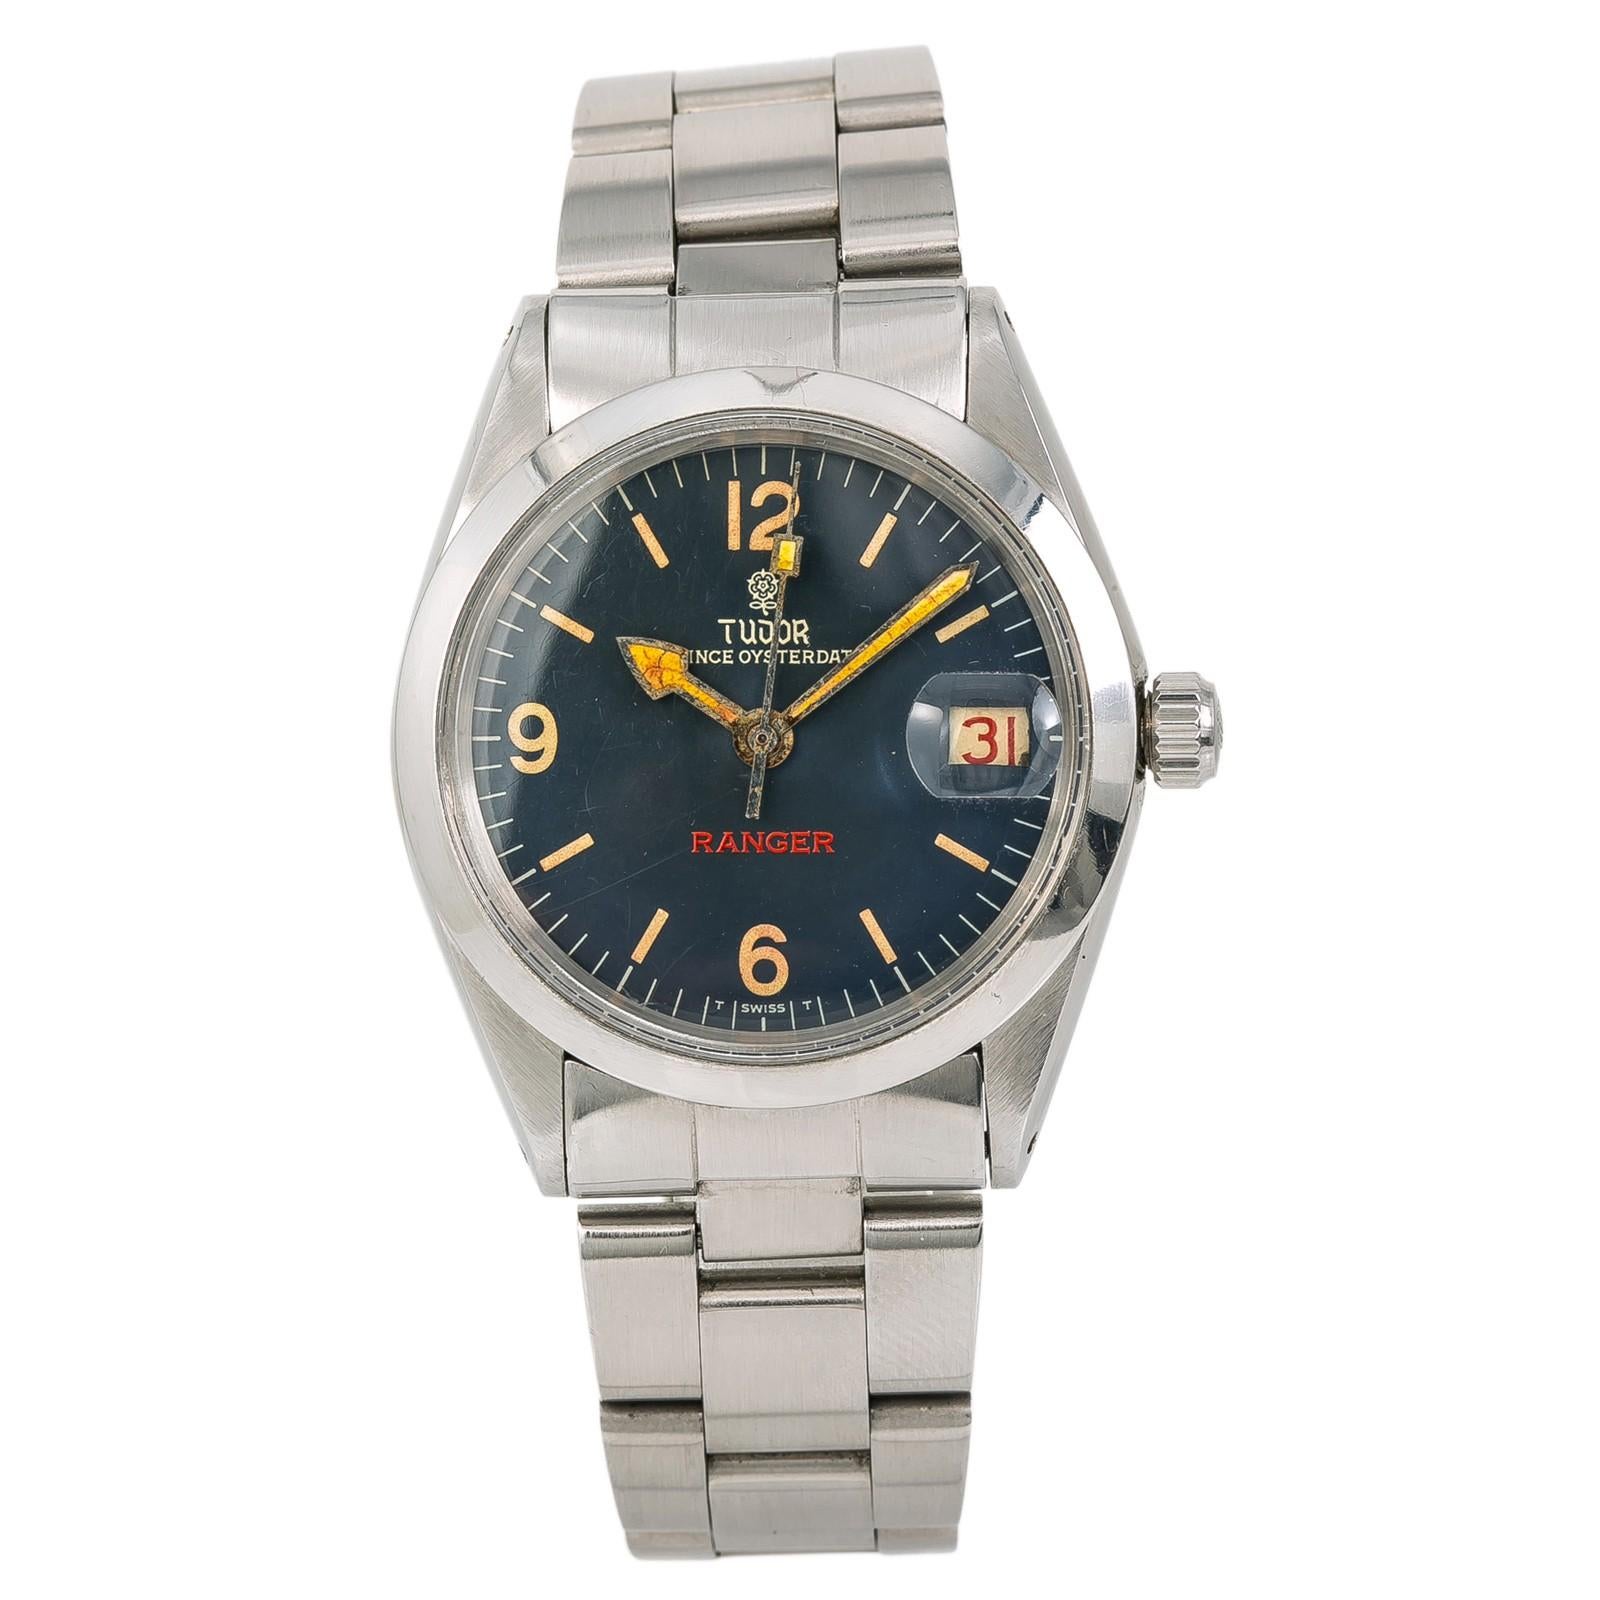 Tudor Prince Oysterdate Ranger 9050 Men's Automatic Vintage Watch SS